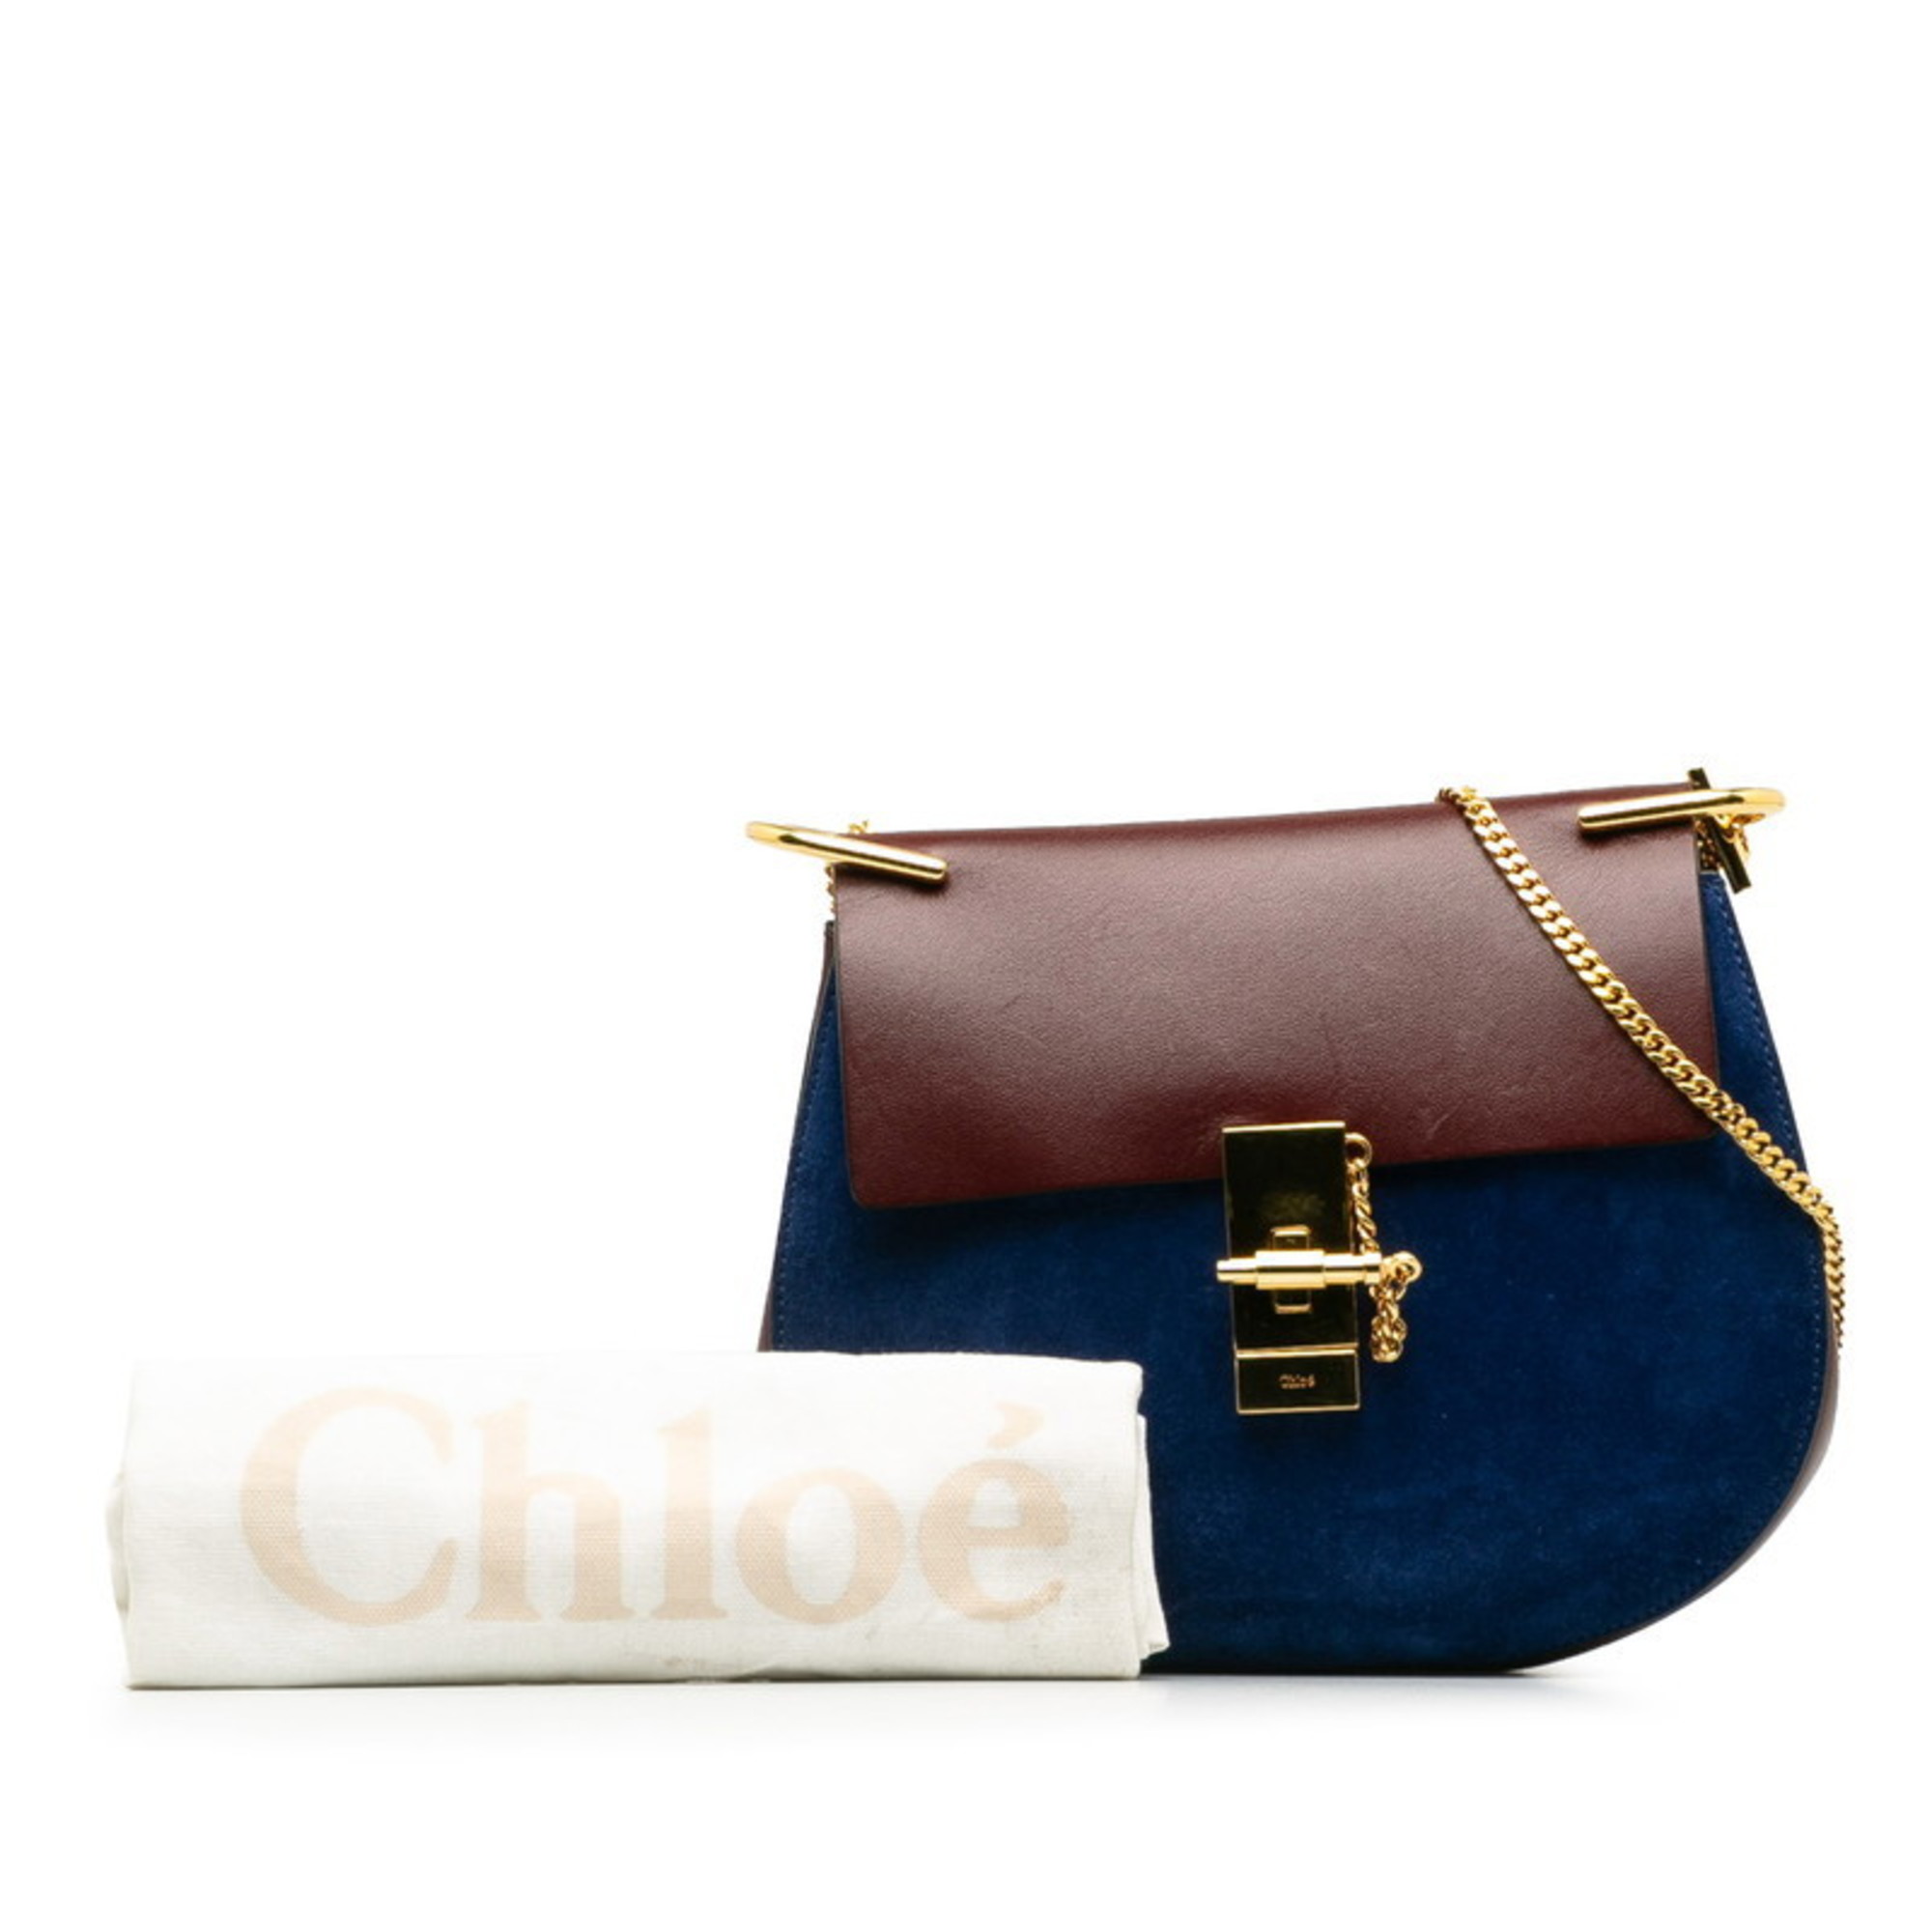 Chloé Chloe Drew Chain Shoulder Bag Blue Brown Leather Suede Women's